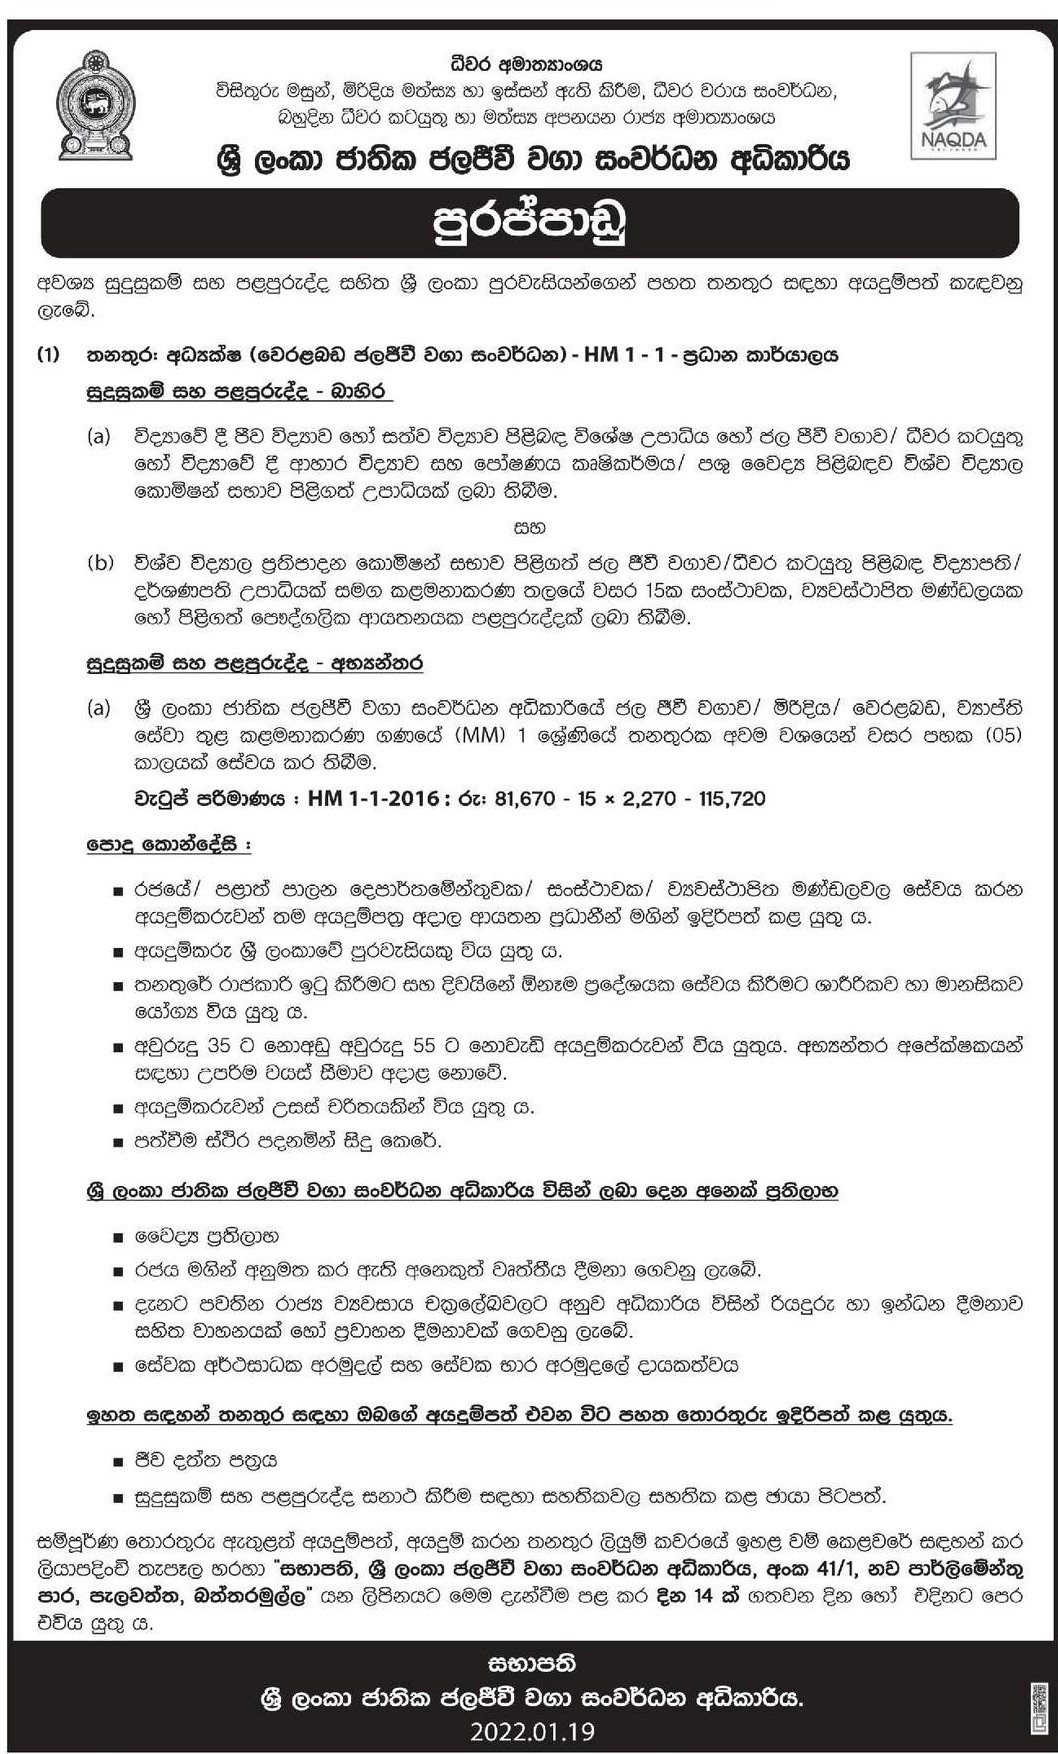 Director Job Vacancy in NAQDA Sri Lanka Details Sinhala